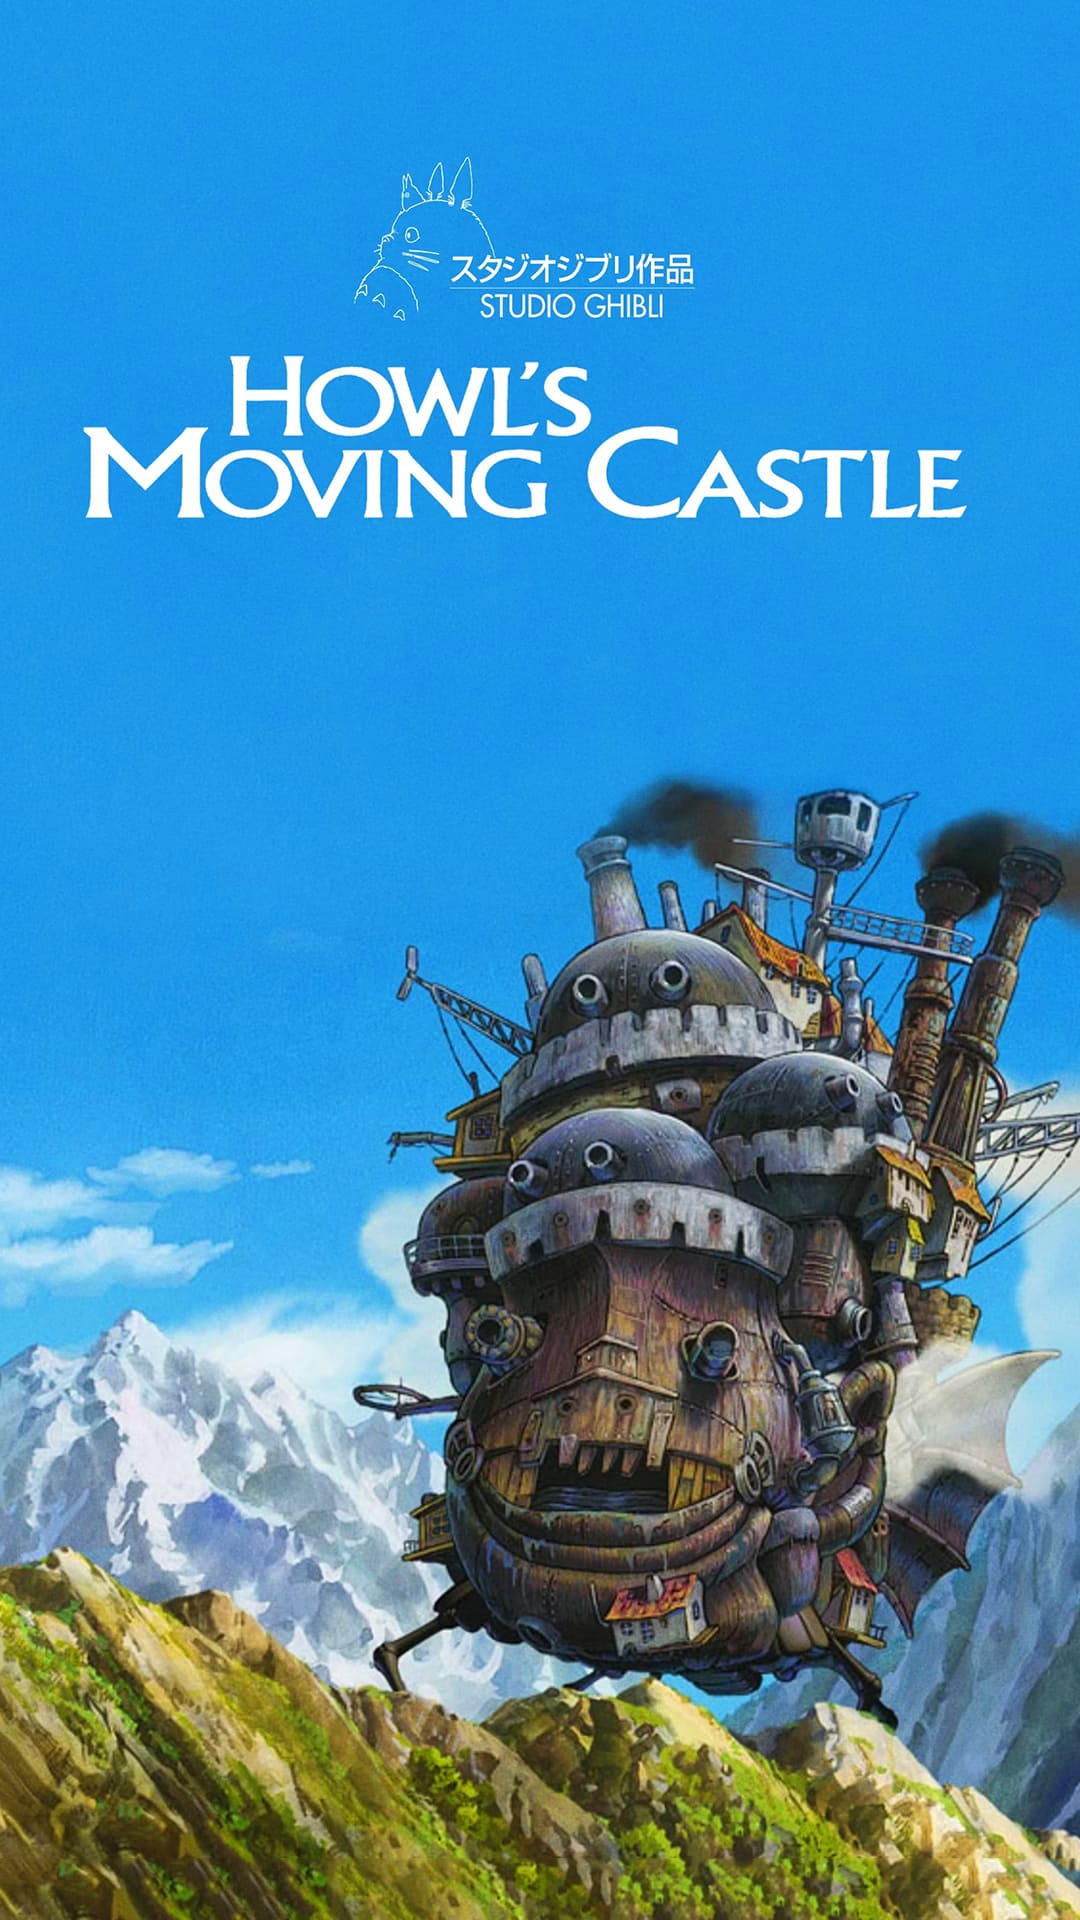 Howls Moving Castle Wallpaper - TubeWP